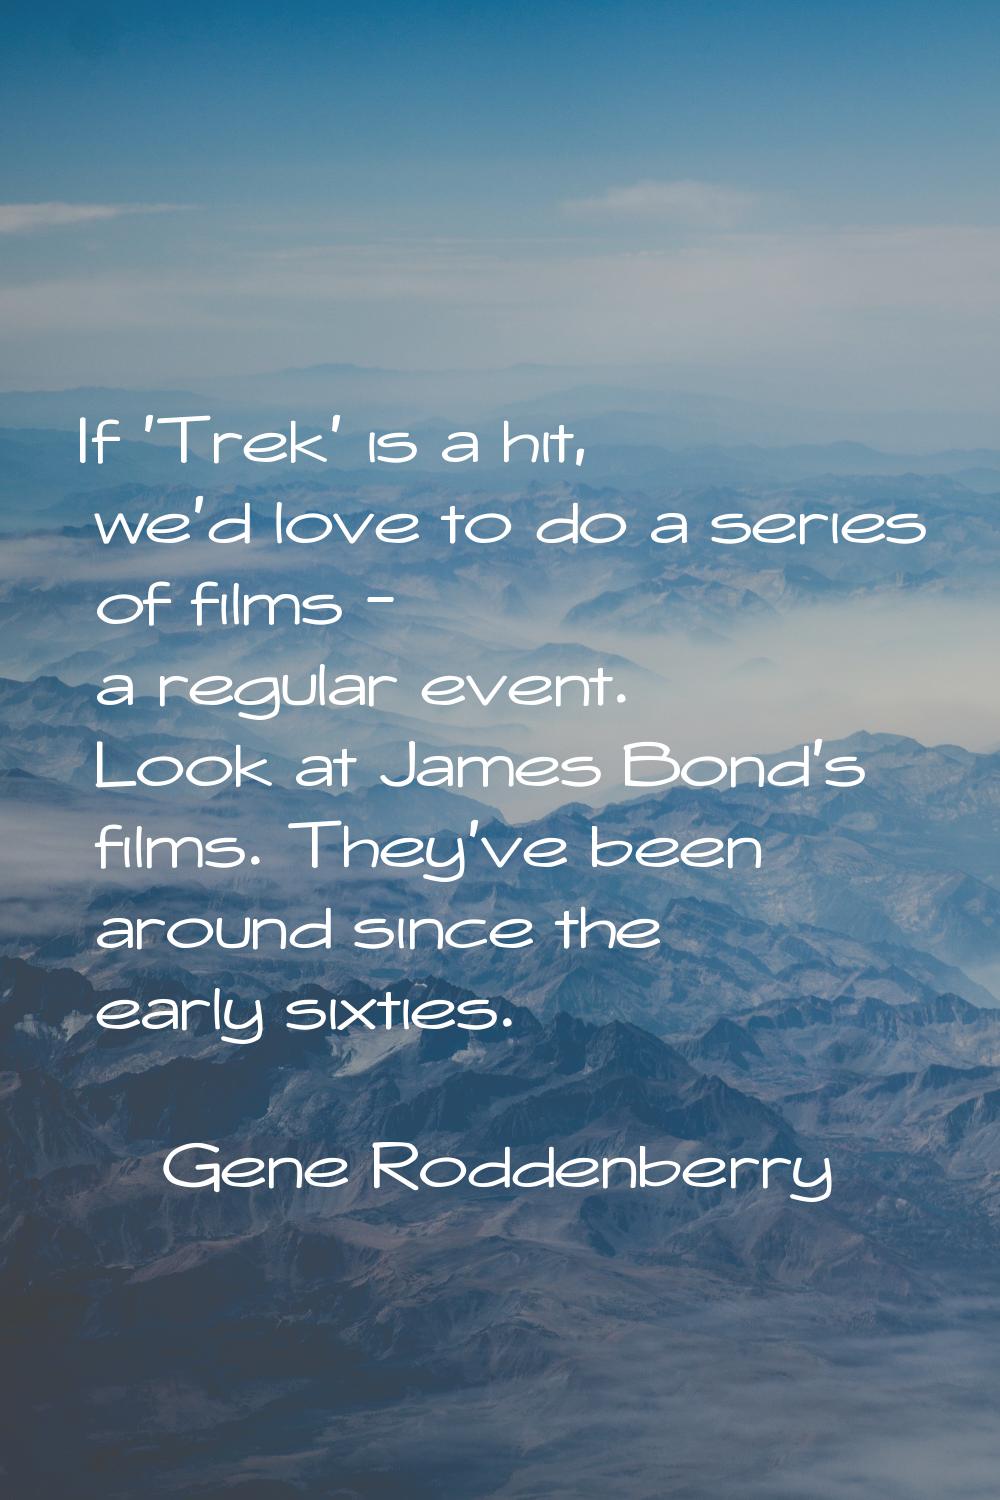 If 'Trek' is a hit, we'd love to do a series of films - a regular event. Look at James Bond's films